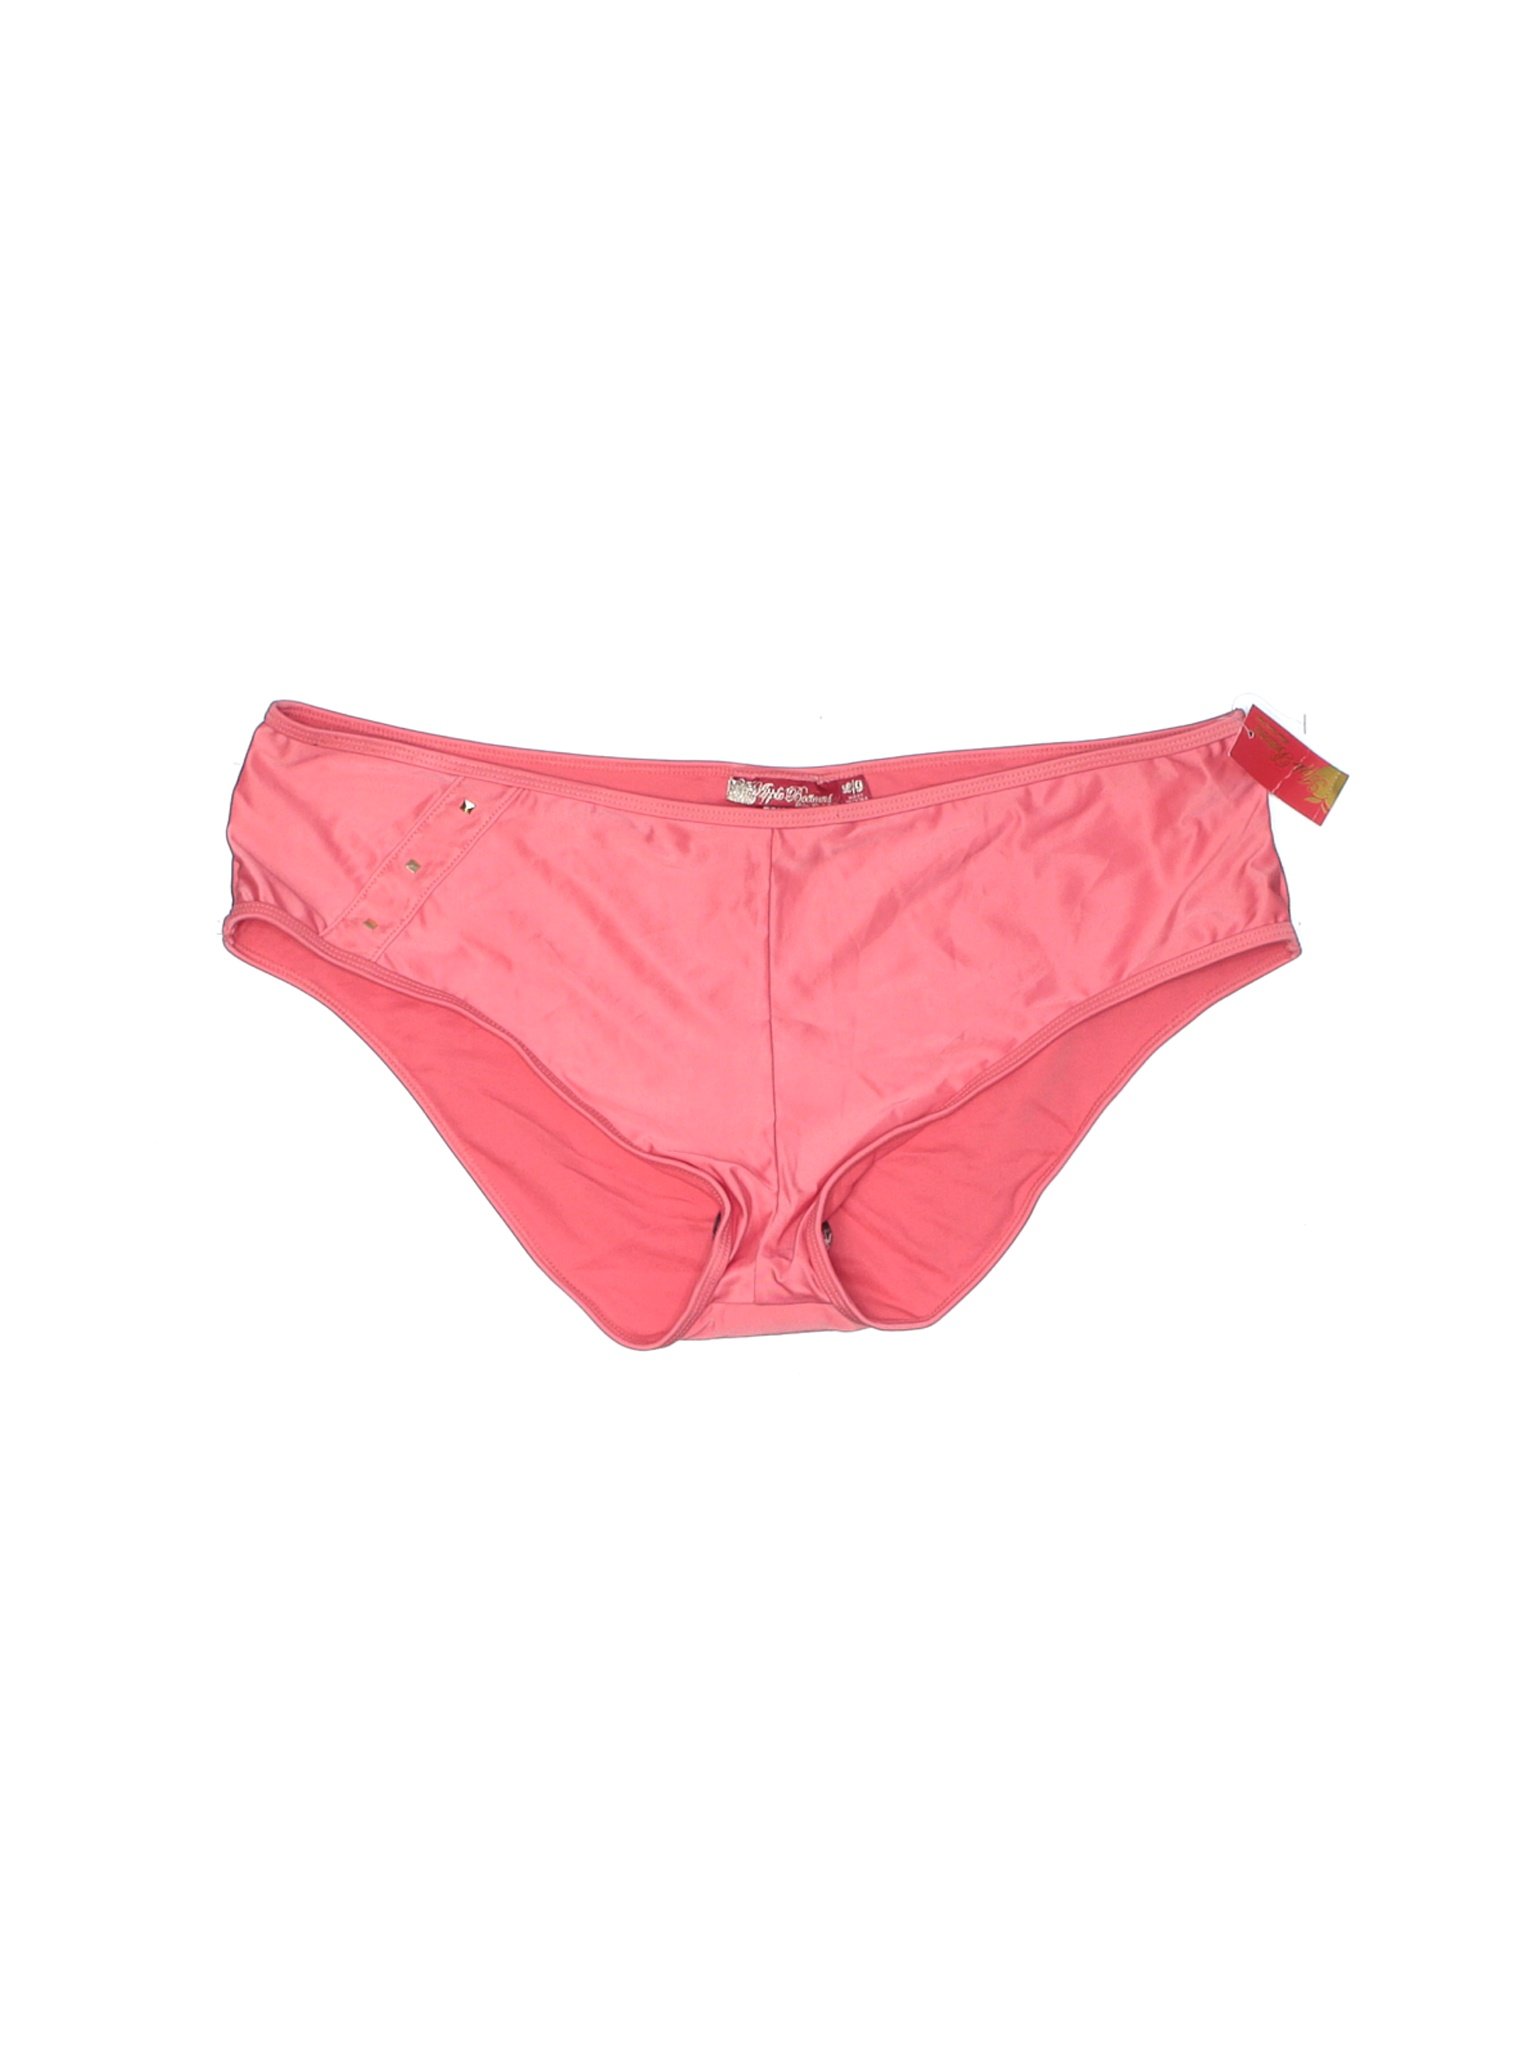 Apple Bottoms Women Pink Swimsuit Bottoms L | eBay